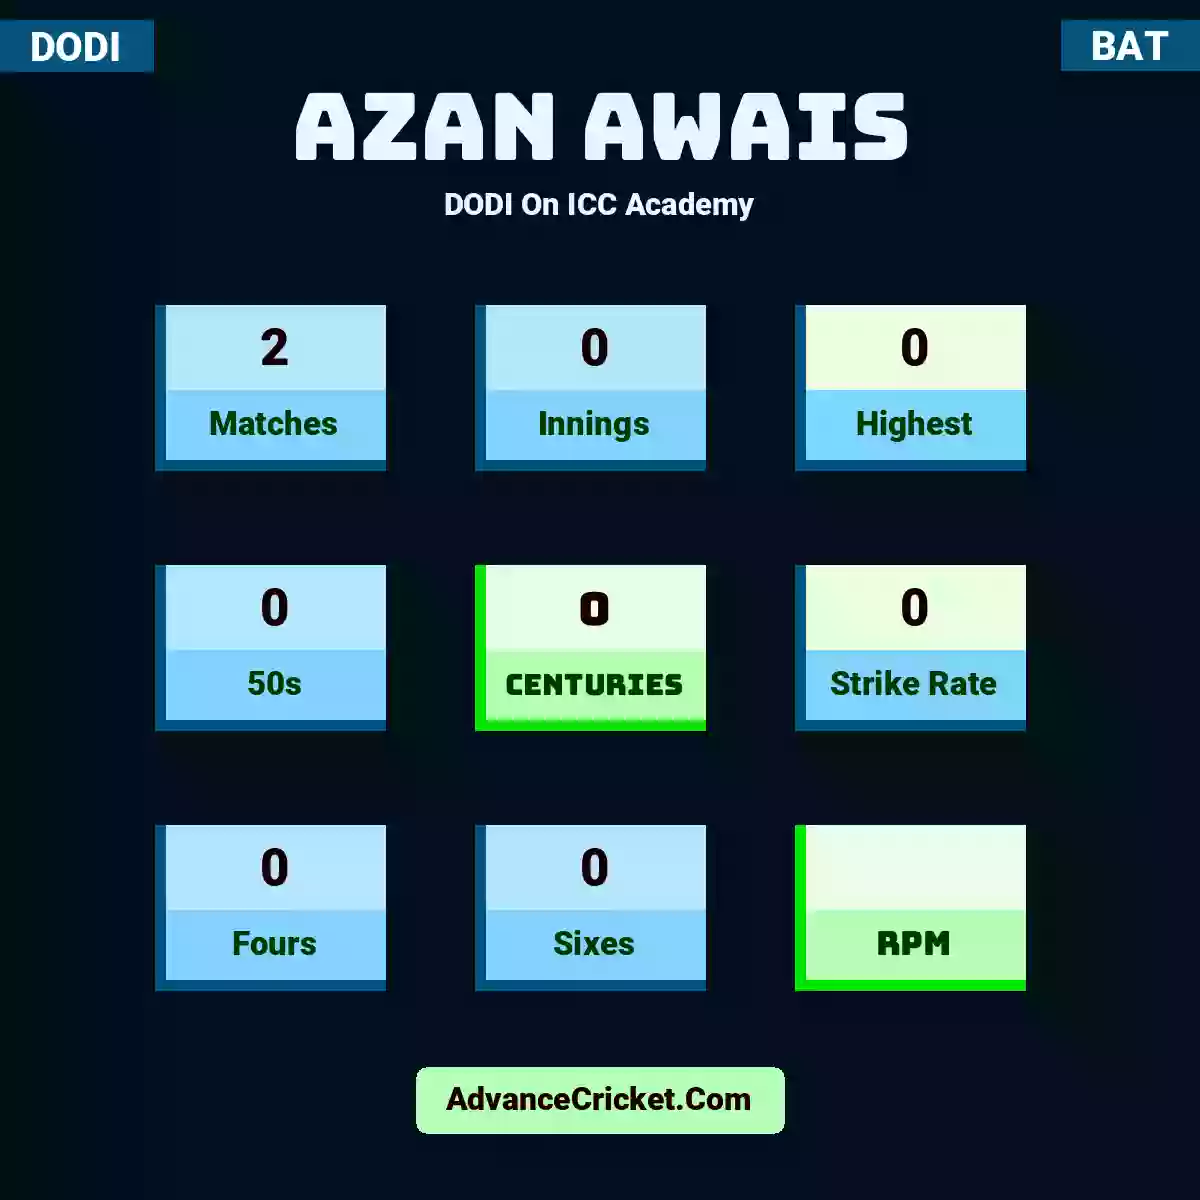 Azan Awais DODI  On ICC Academy, Azan Awais played 2 matches, scored 0 runs as highest, 0 half-centuries, and 0 centuries, with a strike rate of 0. A.Awais hit 0 fours and 0 sixes.